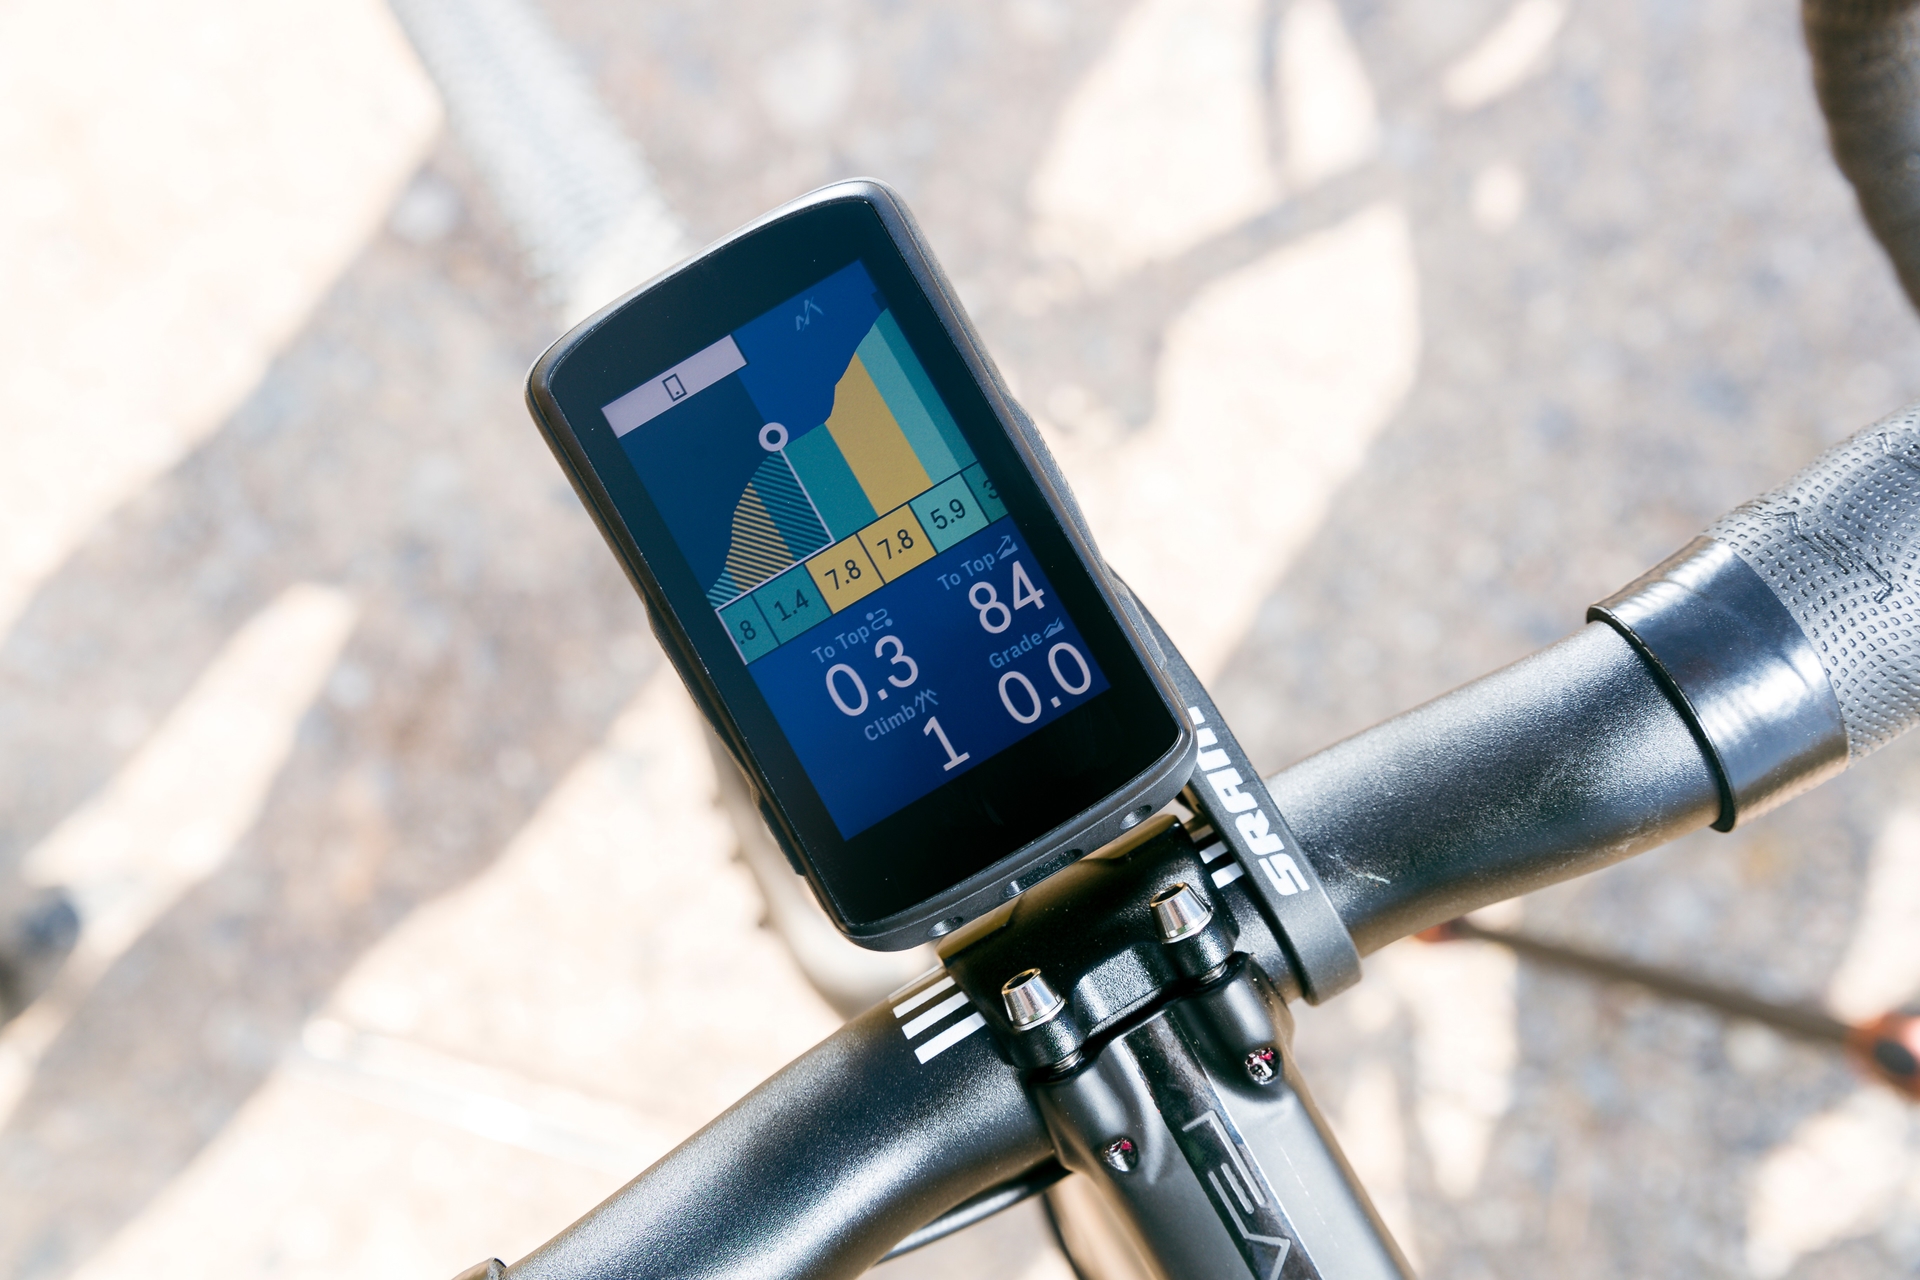 Garmin Edge 830 GPS Cycling/Bike Computer with Mapping & Navigation